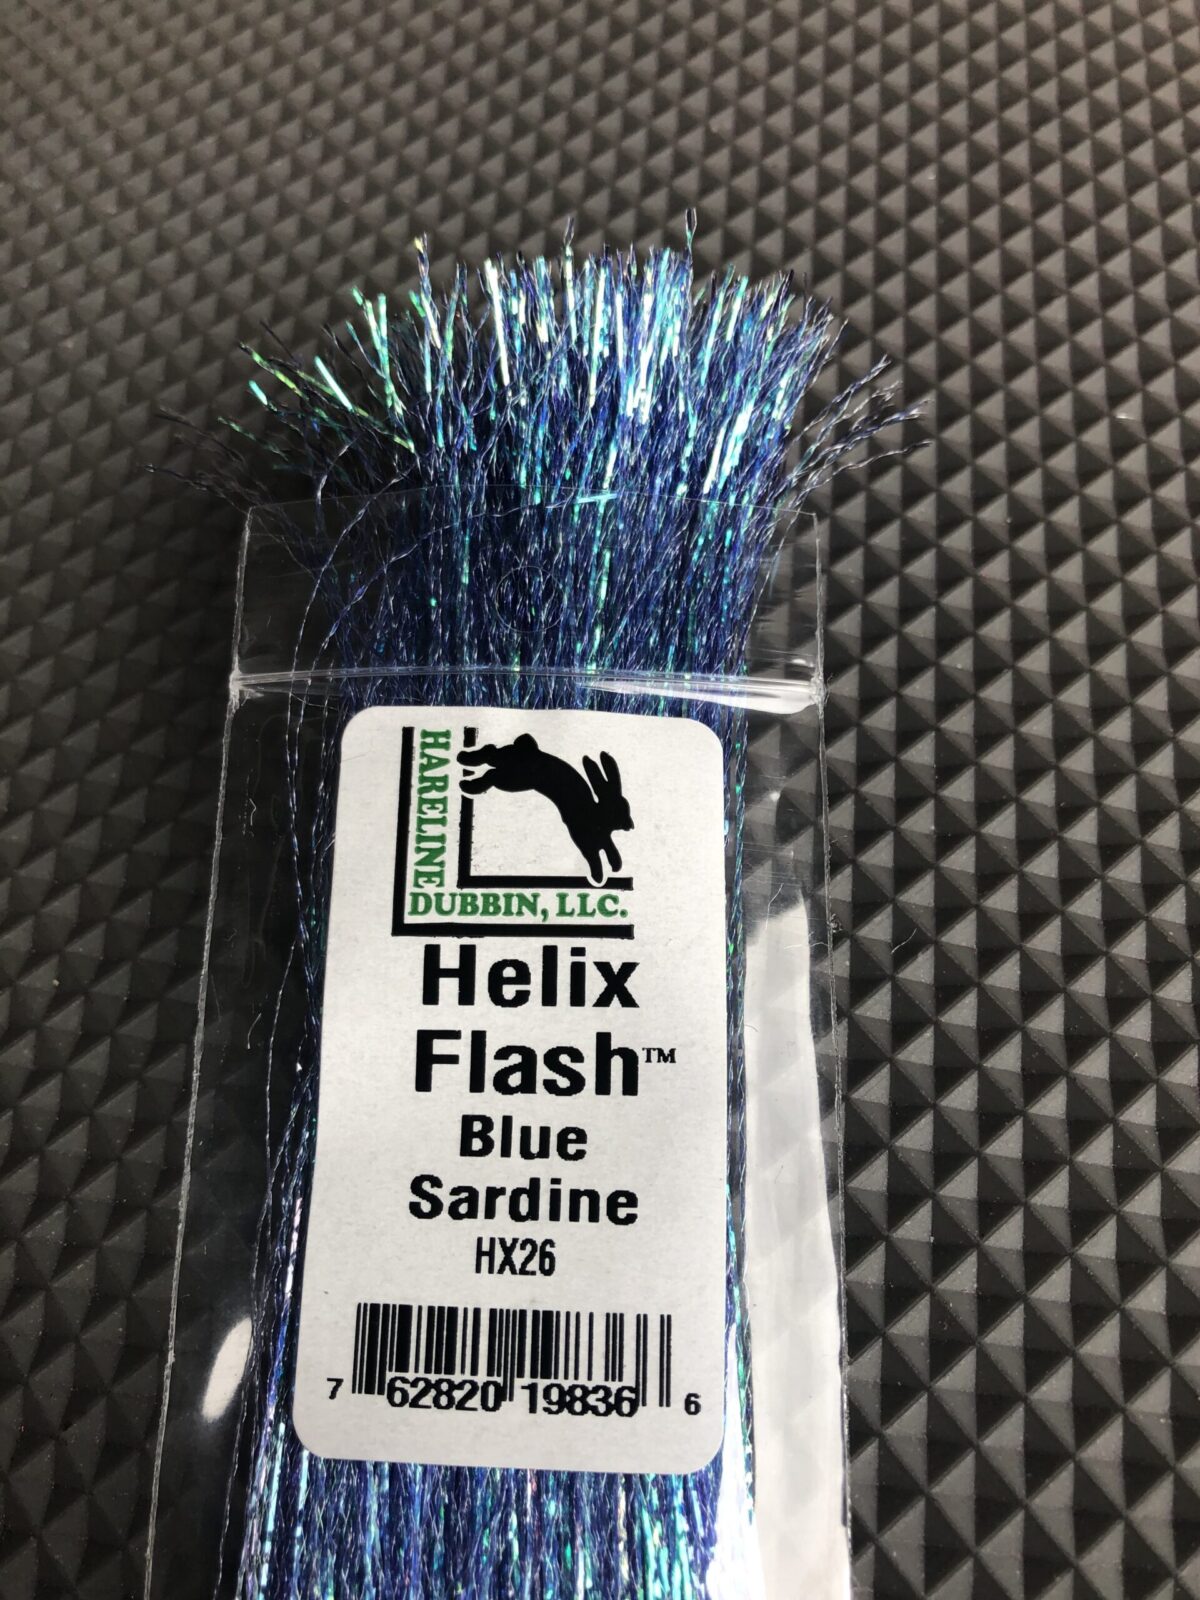 Helix Flash Blue Sardine Dinger Jigs e1586115115639 scaled 1200x1600 - Krystal Flash & Helix Flash